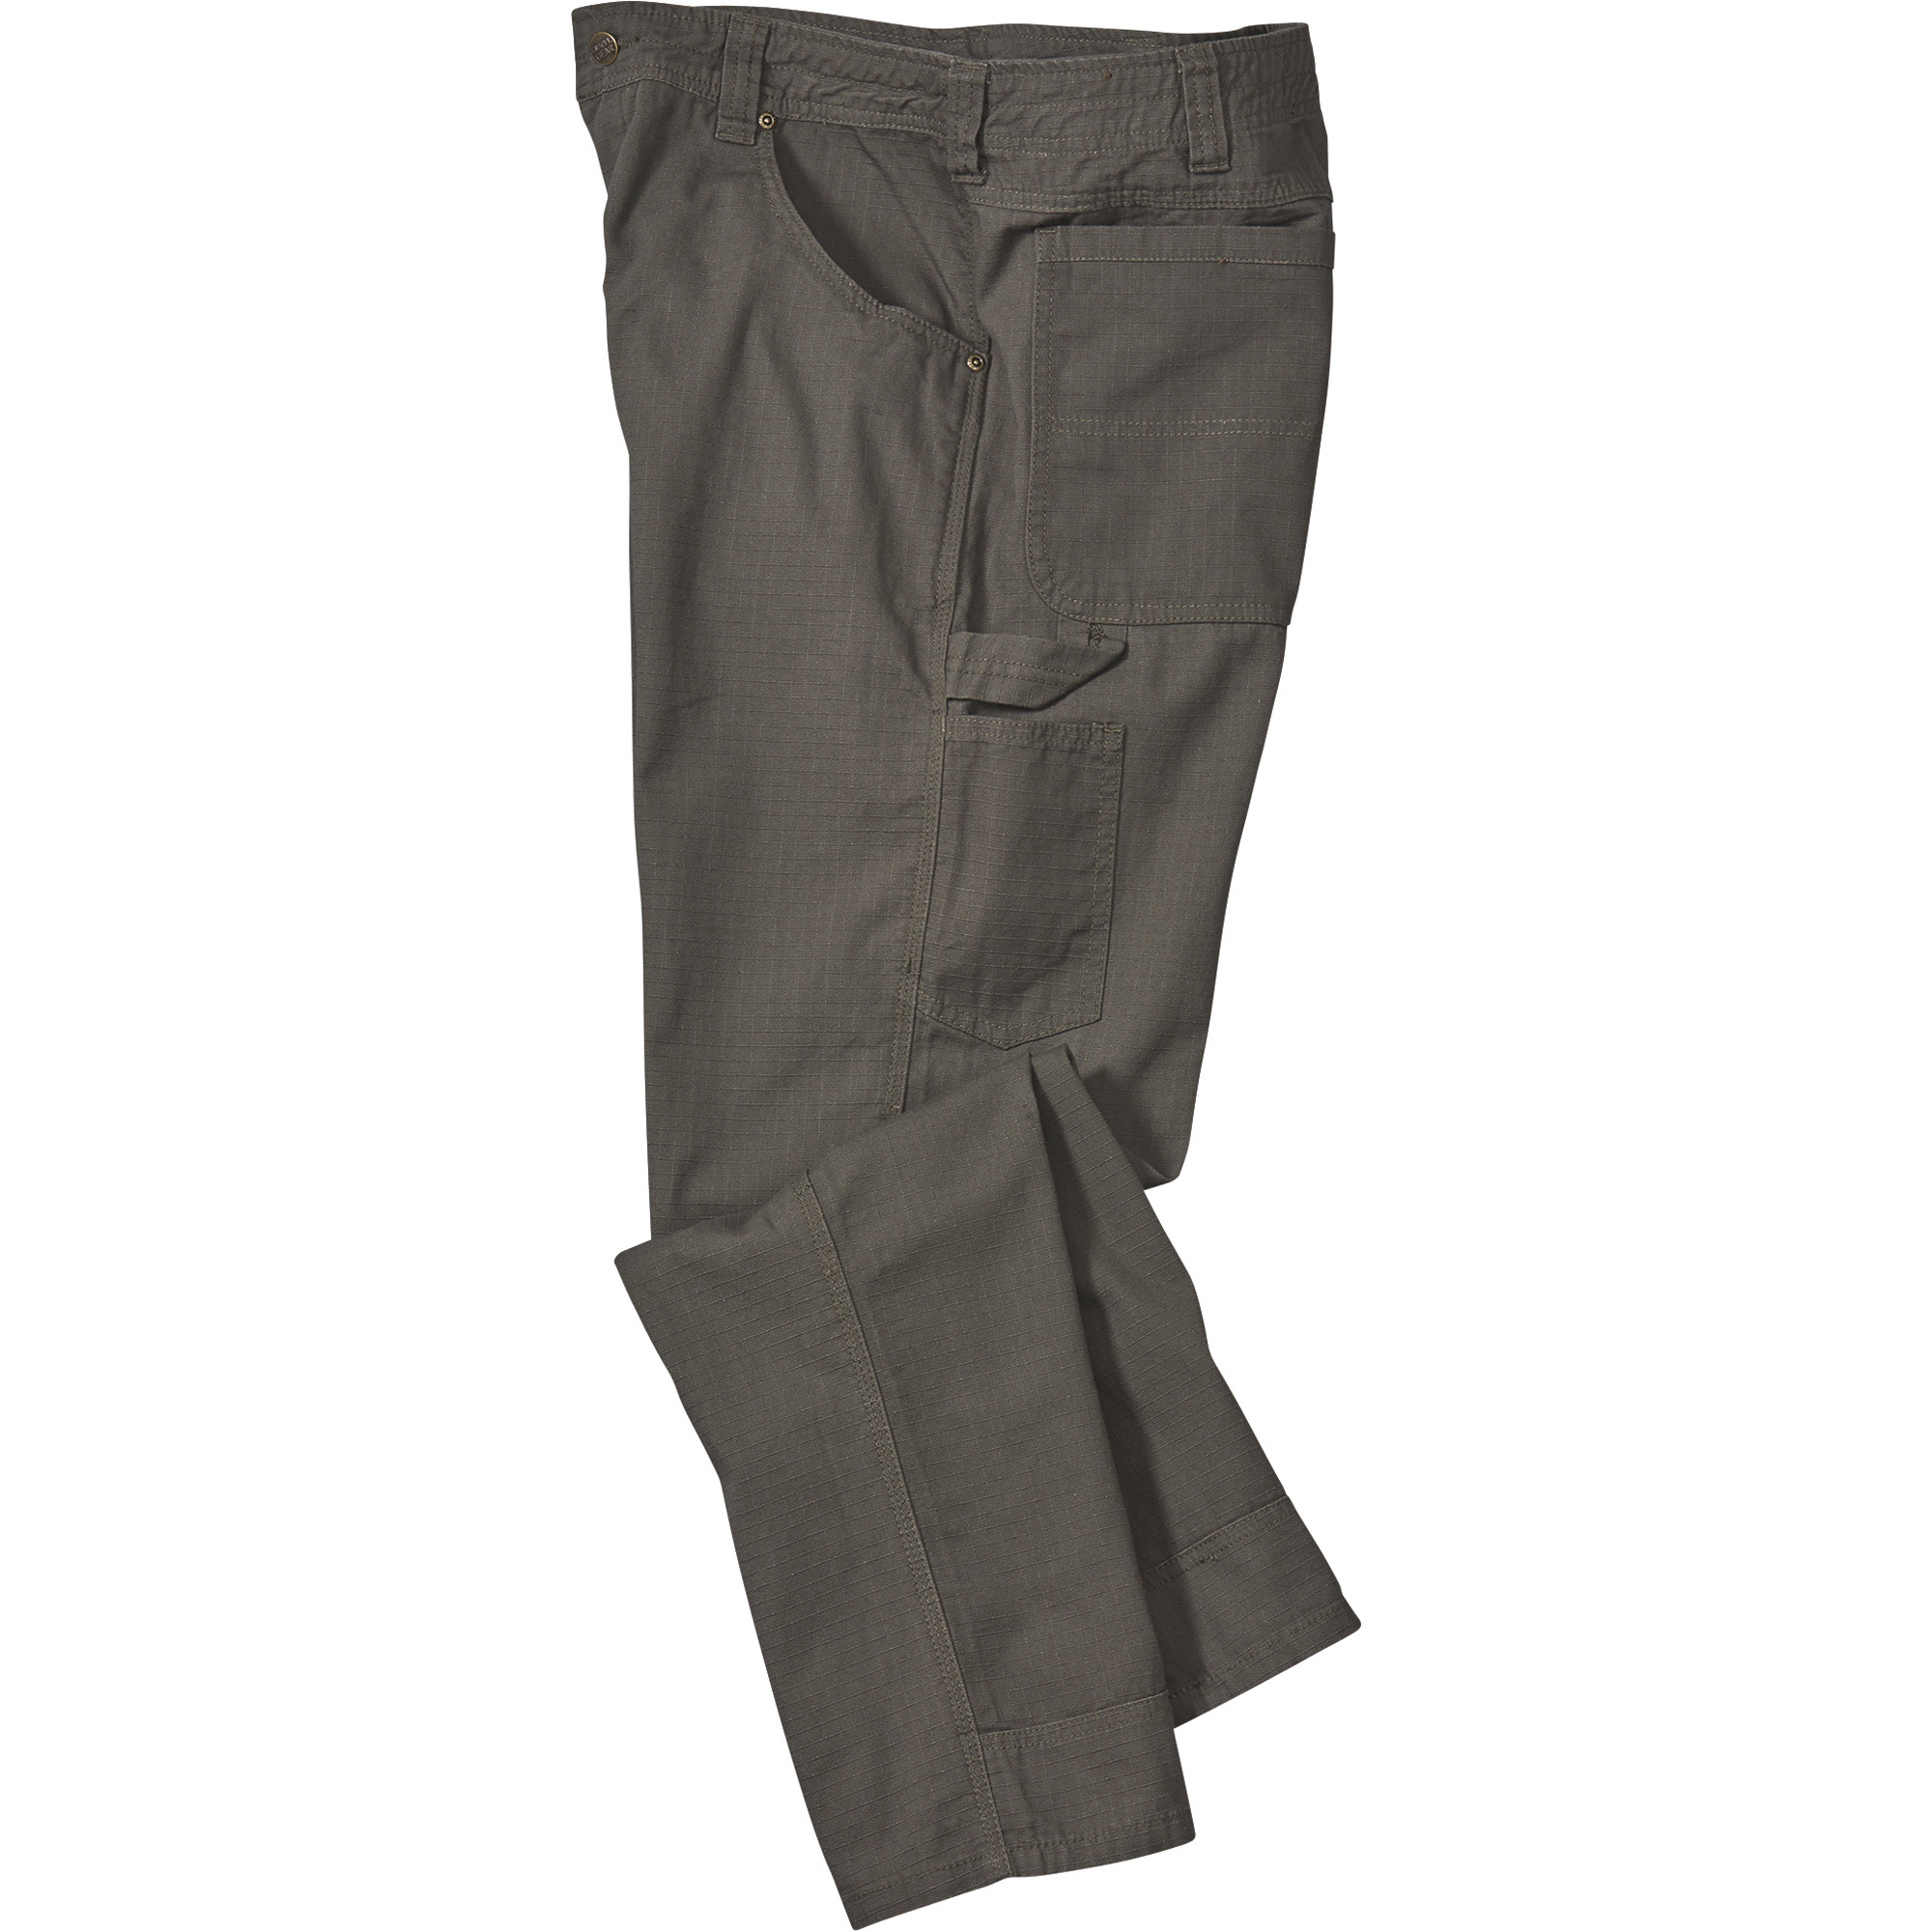 Gravel Gear Men's Cotton Ripstop Carpenter Pants with Teflon Fabric Protector â Moss, 32Inch Waist x 34Inch Inseam